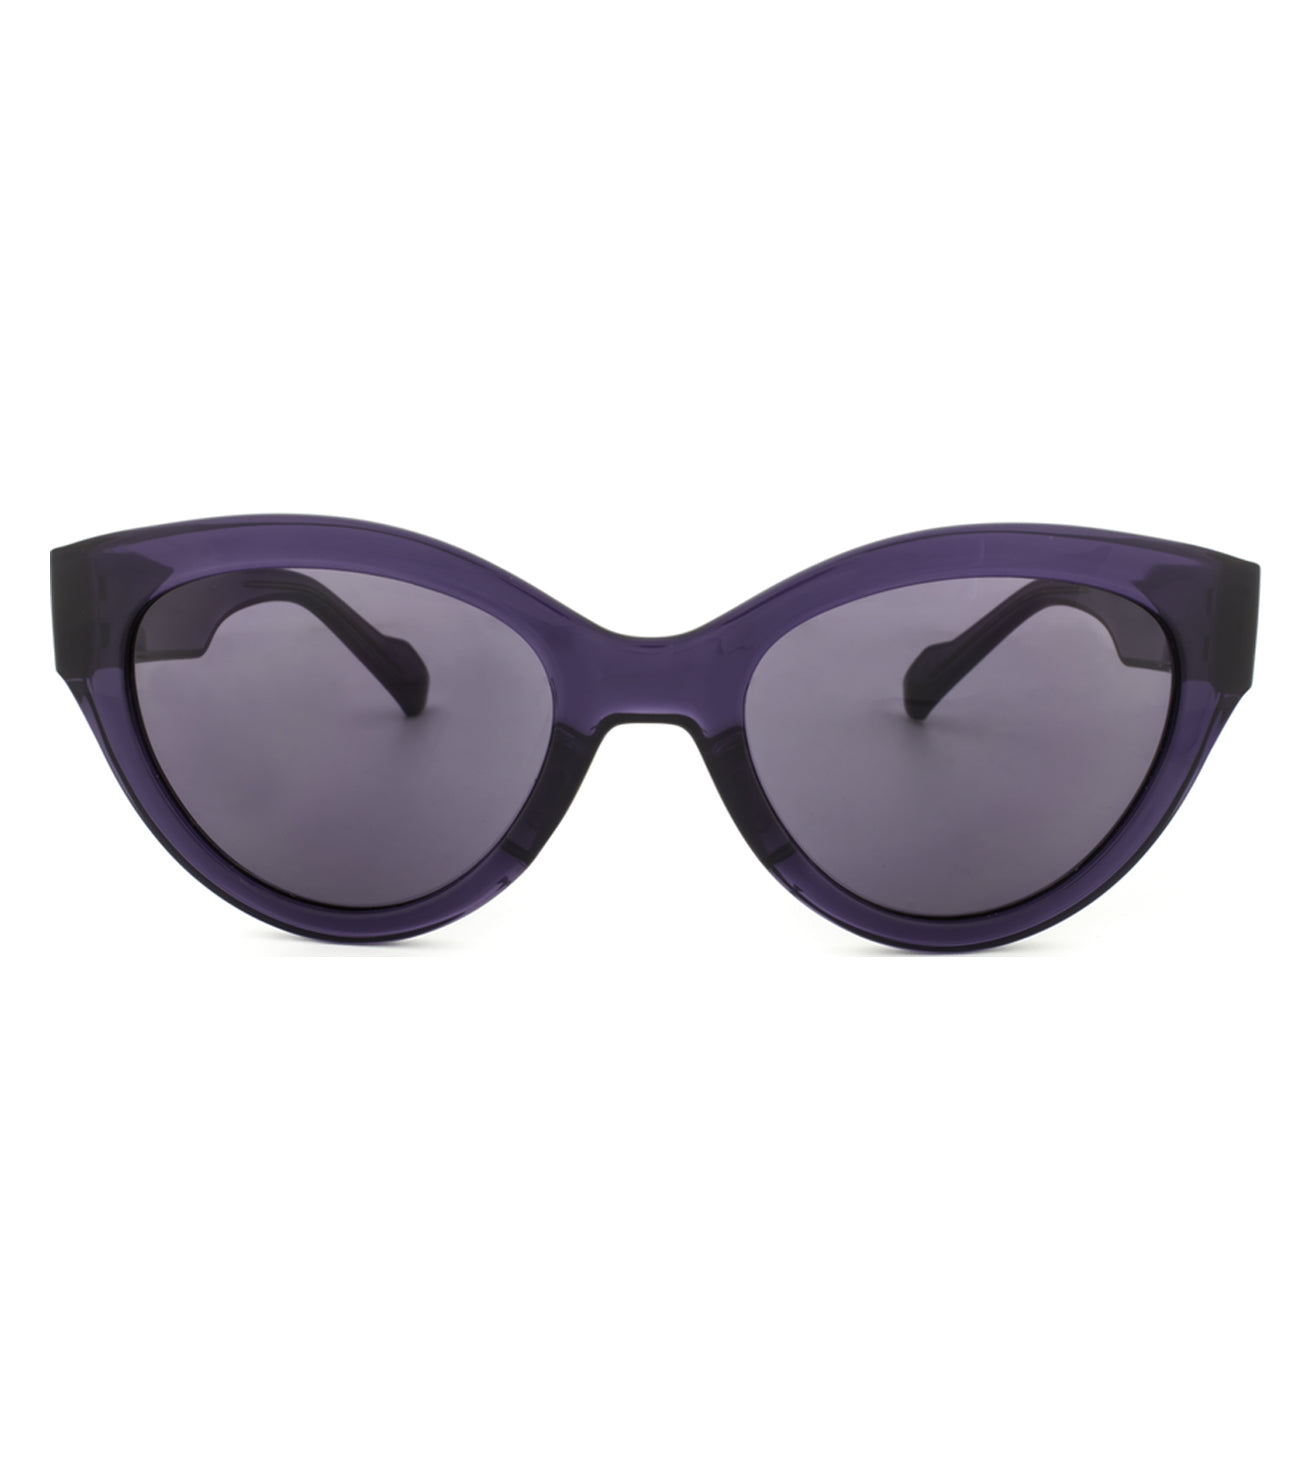 Adidas Originals Women's Purple Cateye Sunglasses